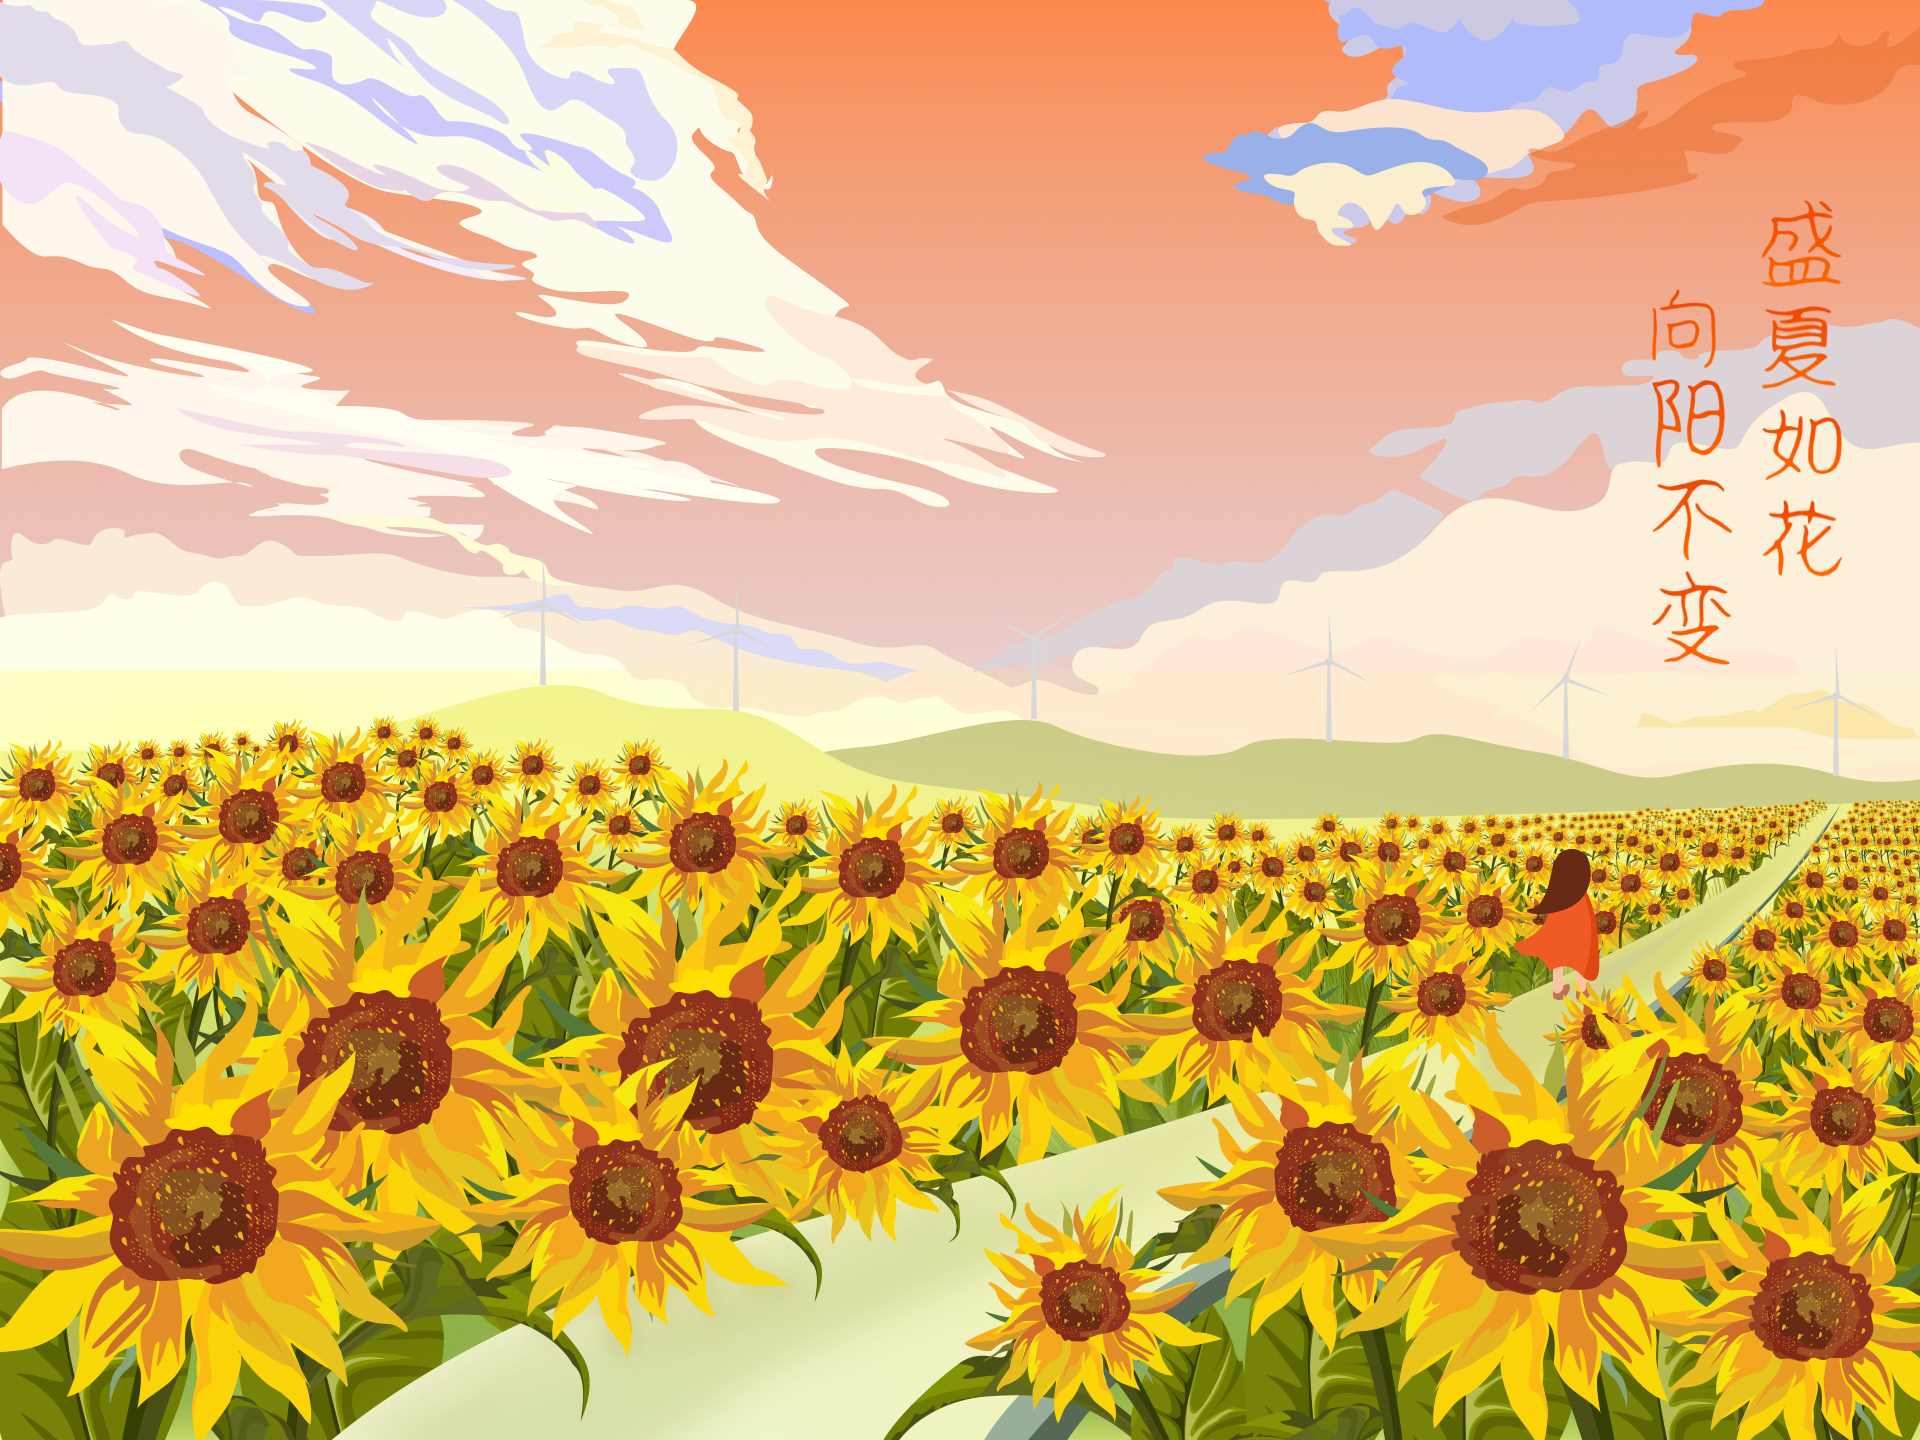 Summer with Sunflower field, Anime art style Stock Illustration | Adobe  Stock